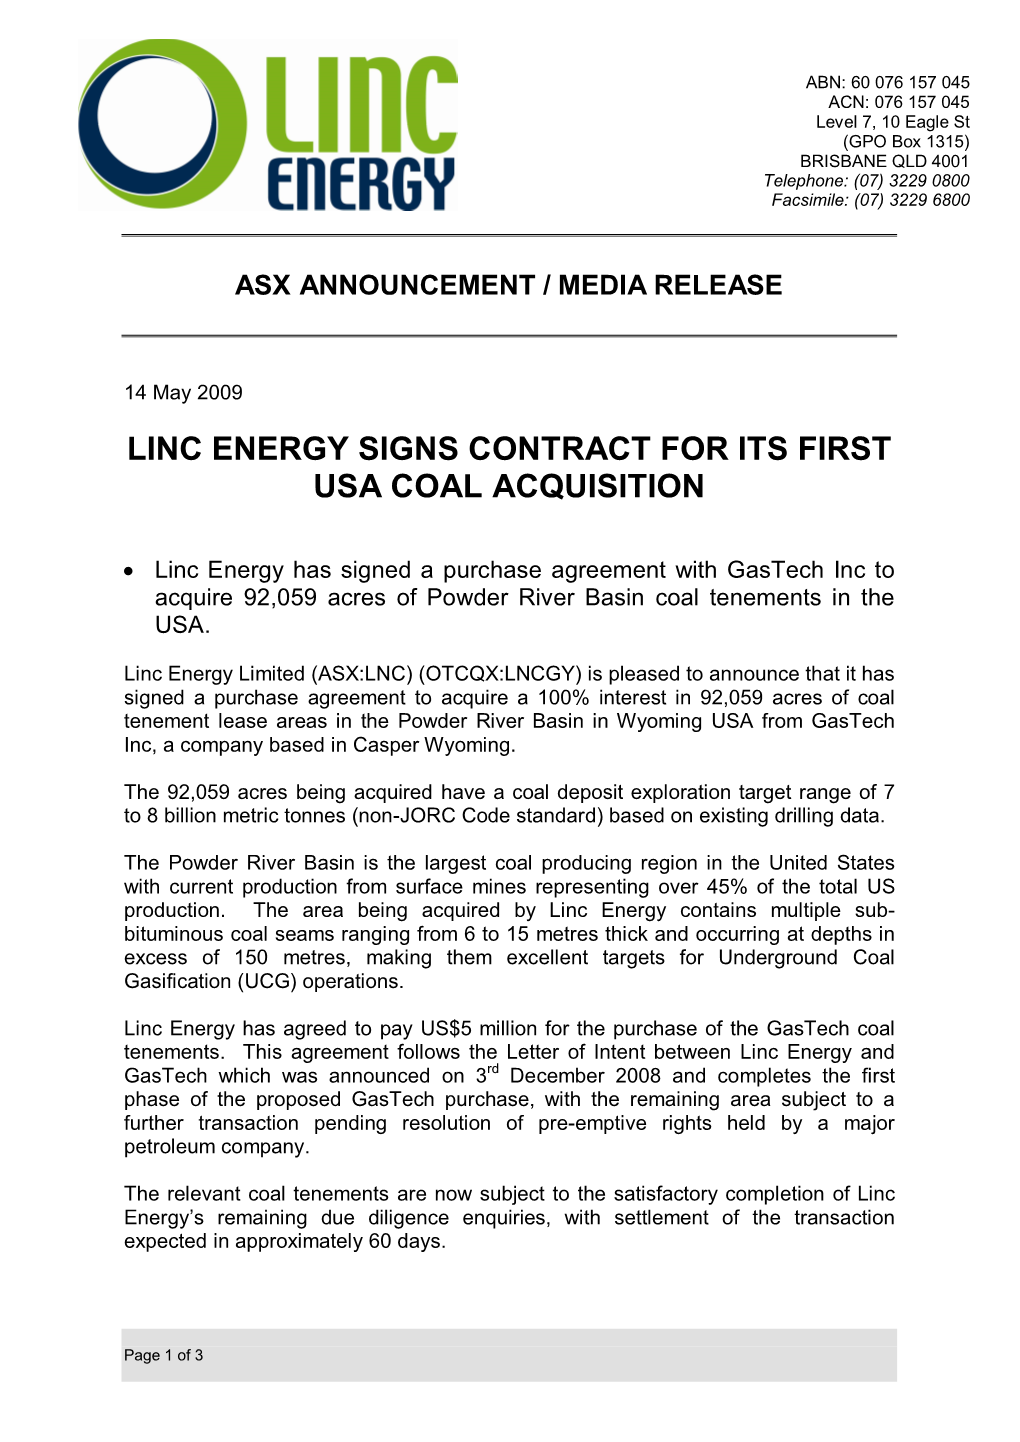 Linc Energy Limited (ASX:LNC)